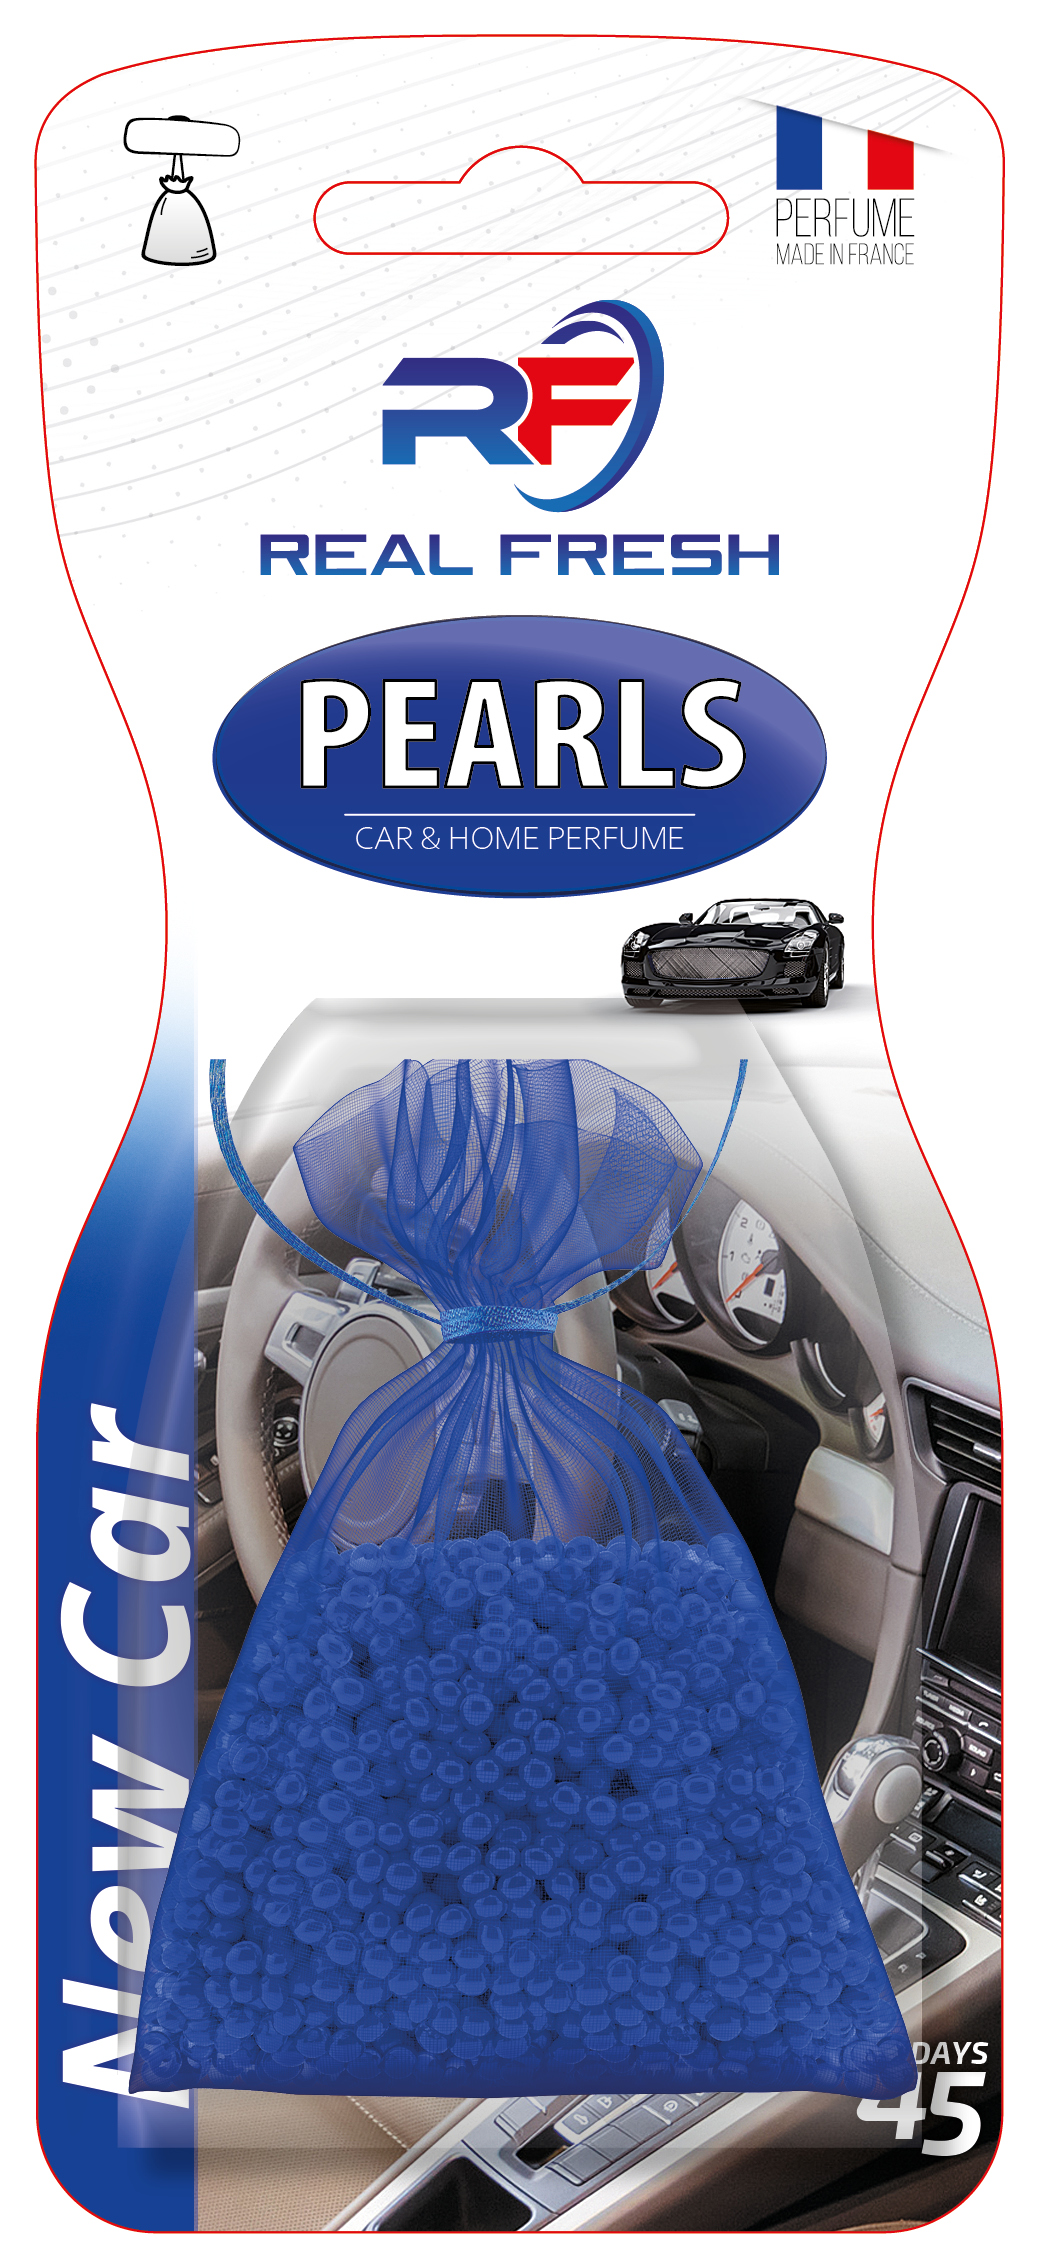 Pearls New Car Image